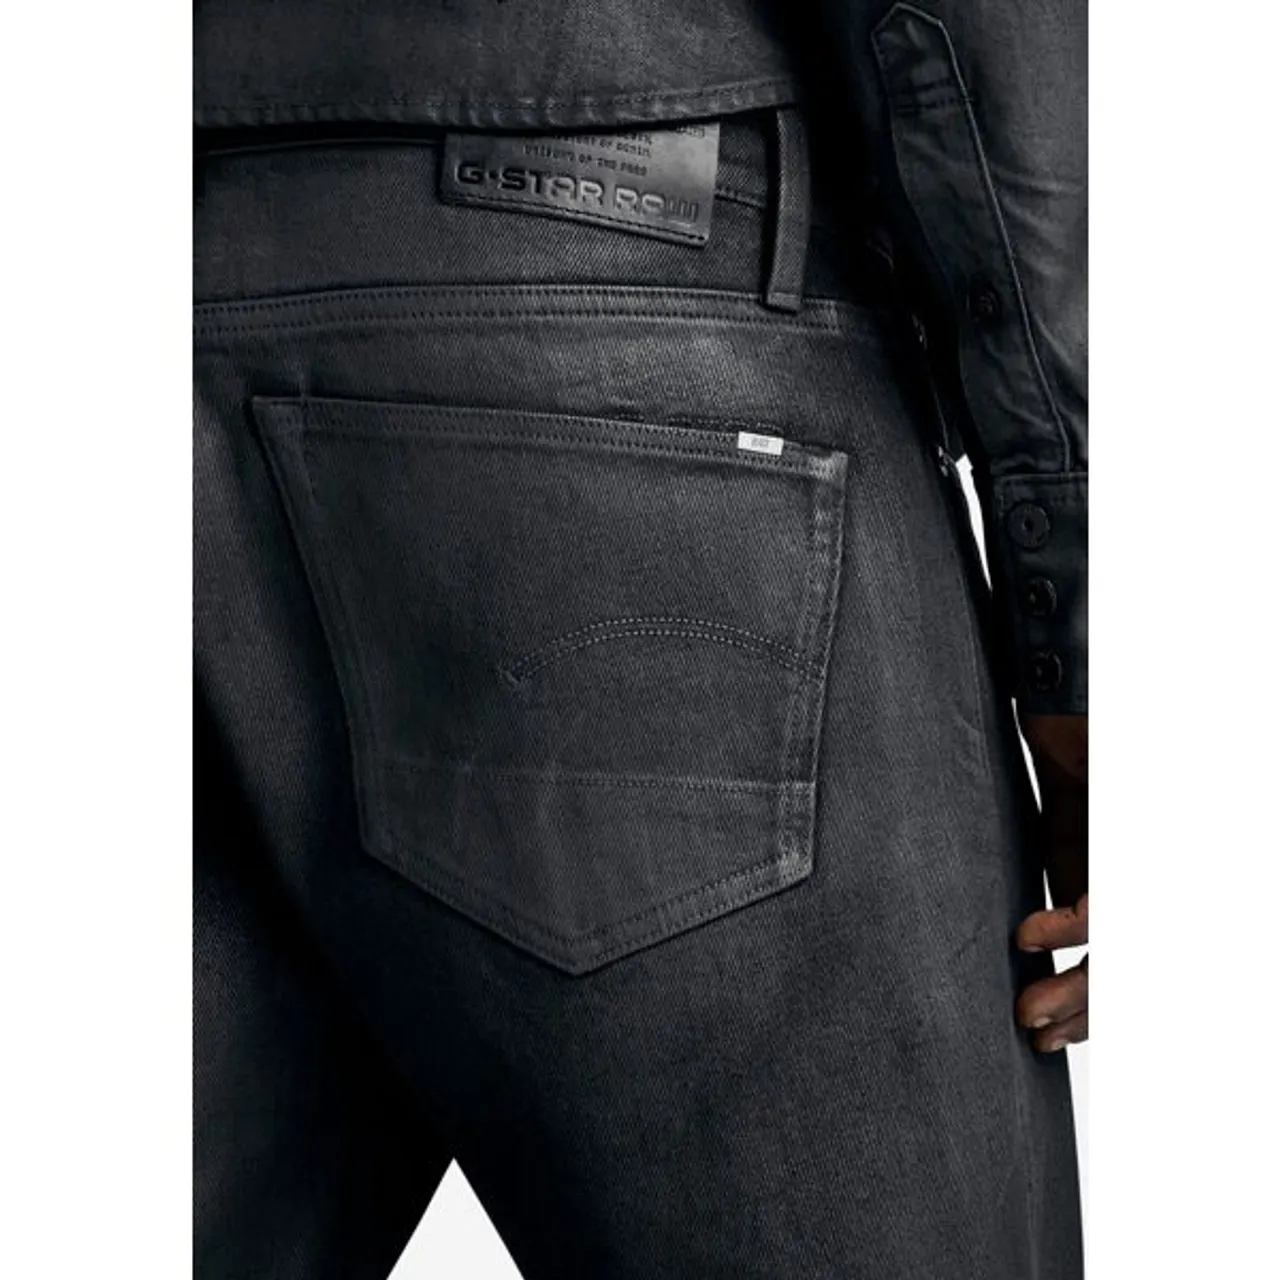 Slim-fit-Jeans G-STAR RAW "3301 Slim" Gr. 30, Länge 32, schwarz (magma cobler) Herren Jeans Slim Fit